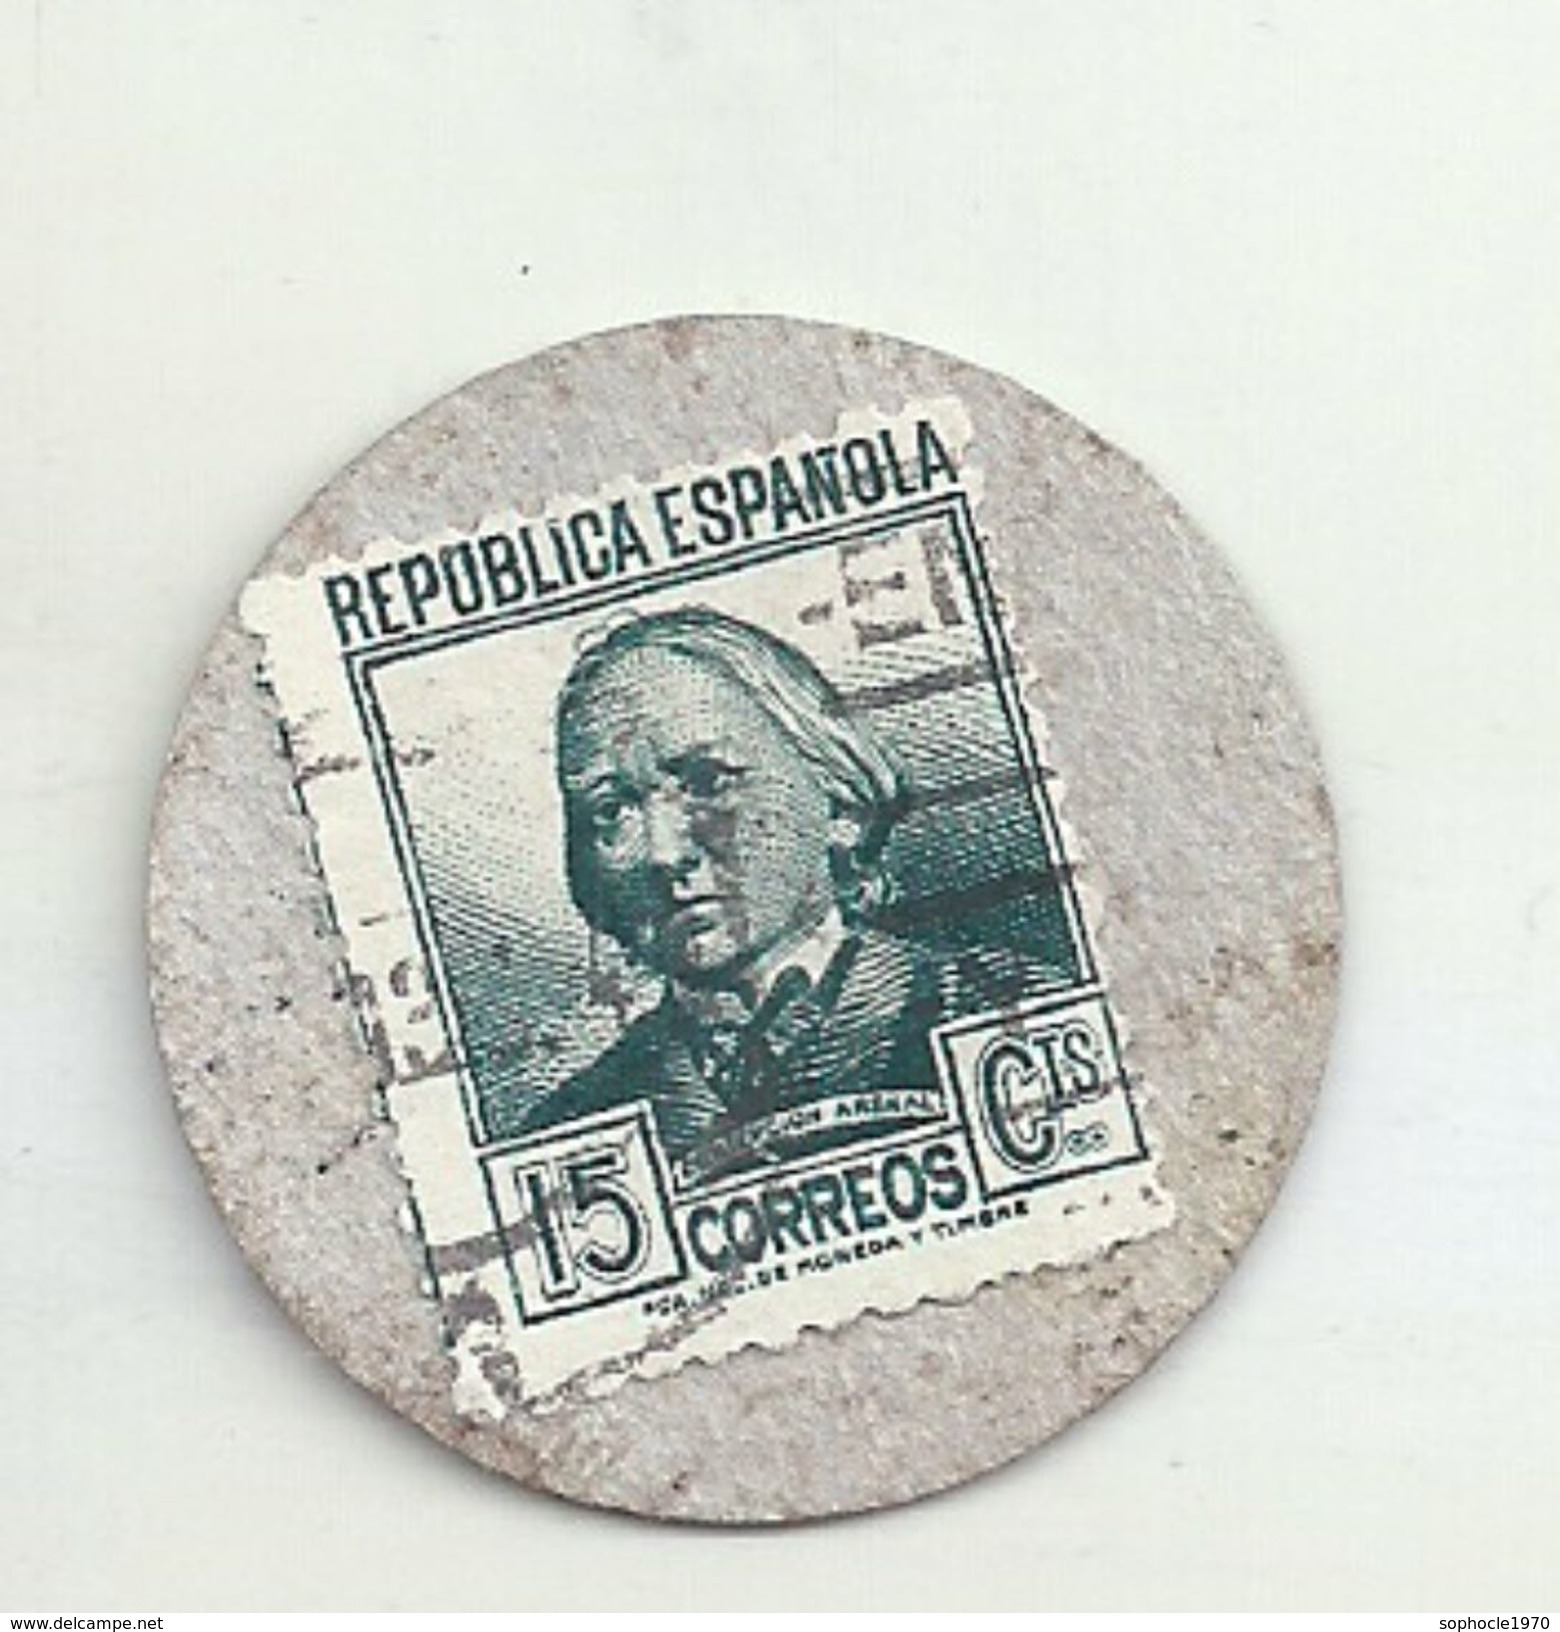 ESPAGNE - 1937 - République Espagnole  CATALOGNR - SEO DE URGEL -  Monéda D'Os Provisionas - Monnaie Carton Timbre -  Noodgeld